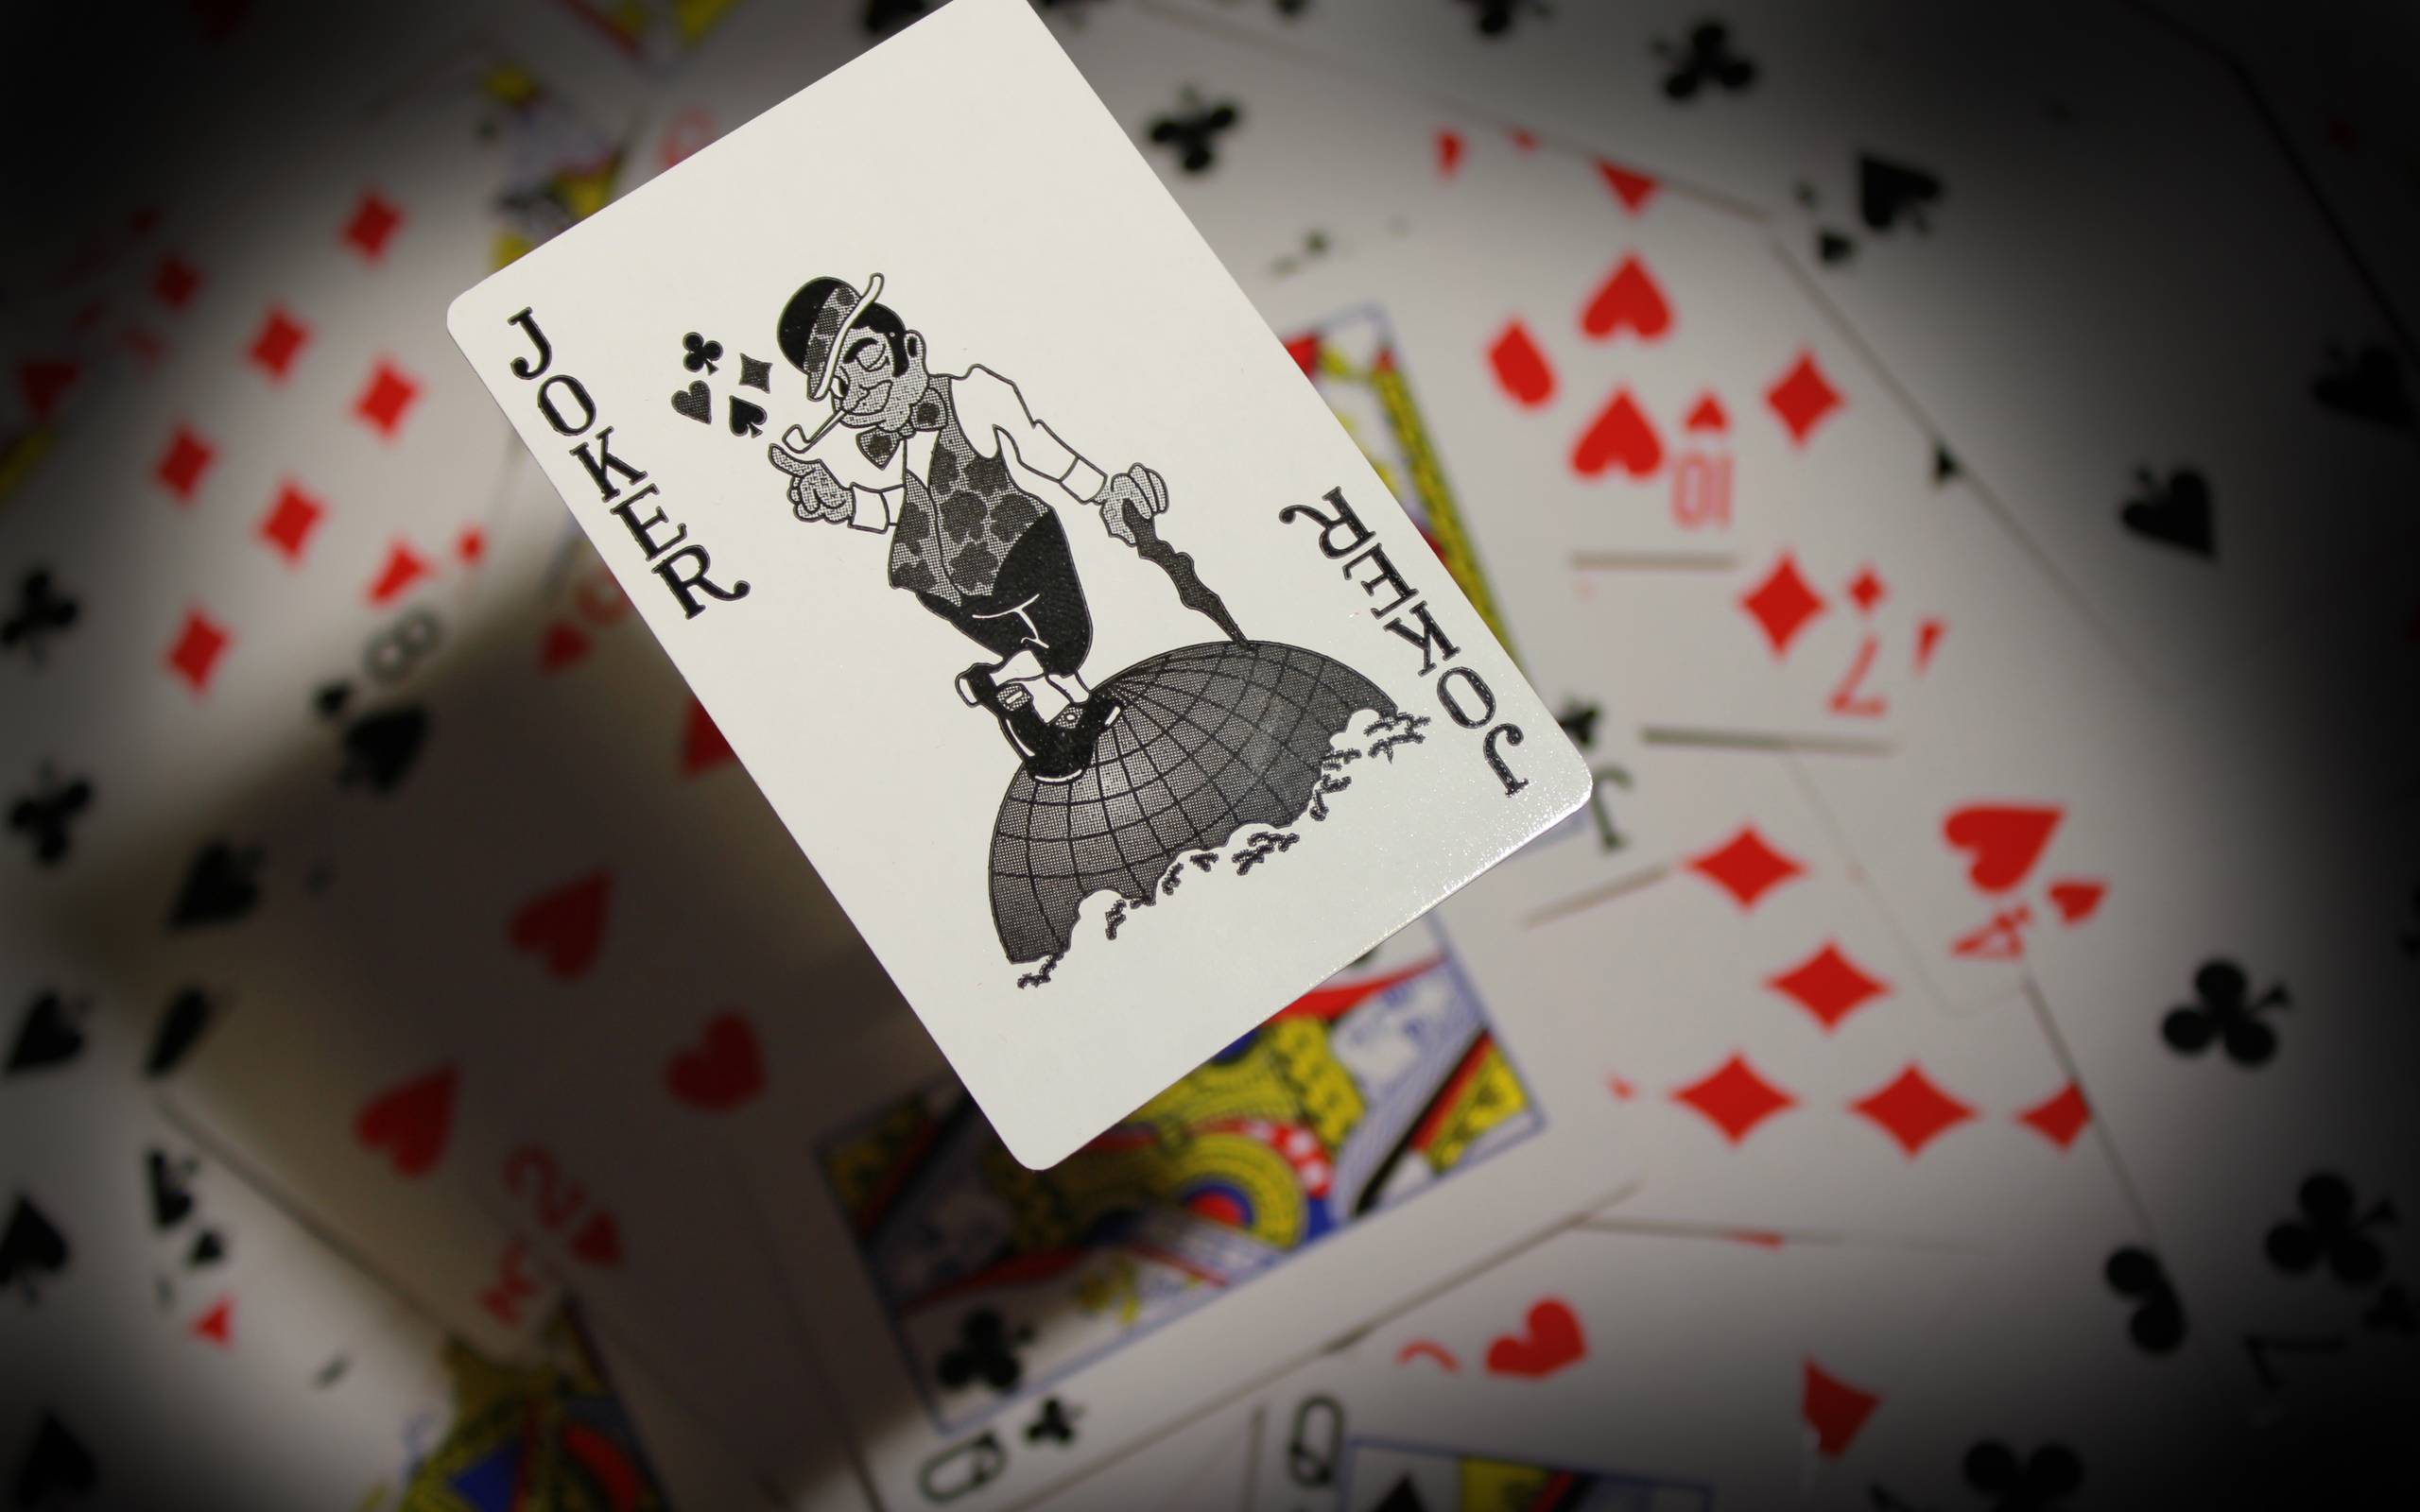 Joker Card Wallpapers Top Free Joker Card Backgrounds Images, Photos, Reviews